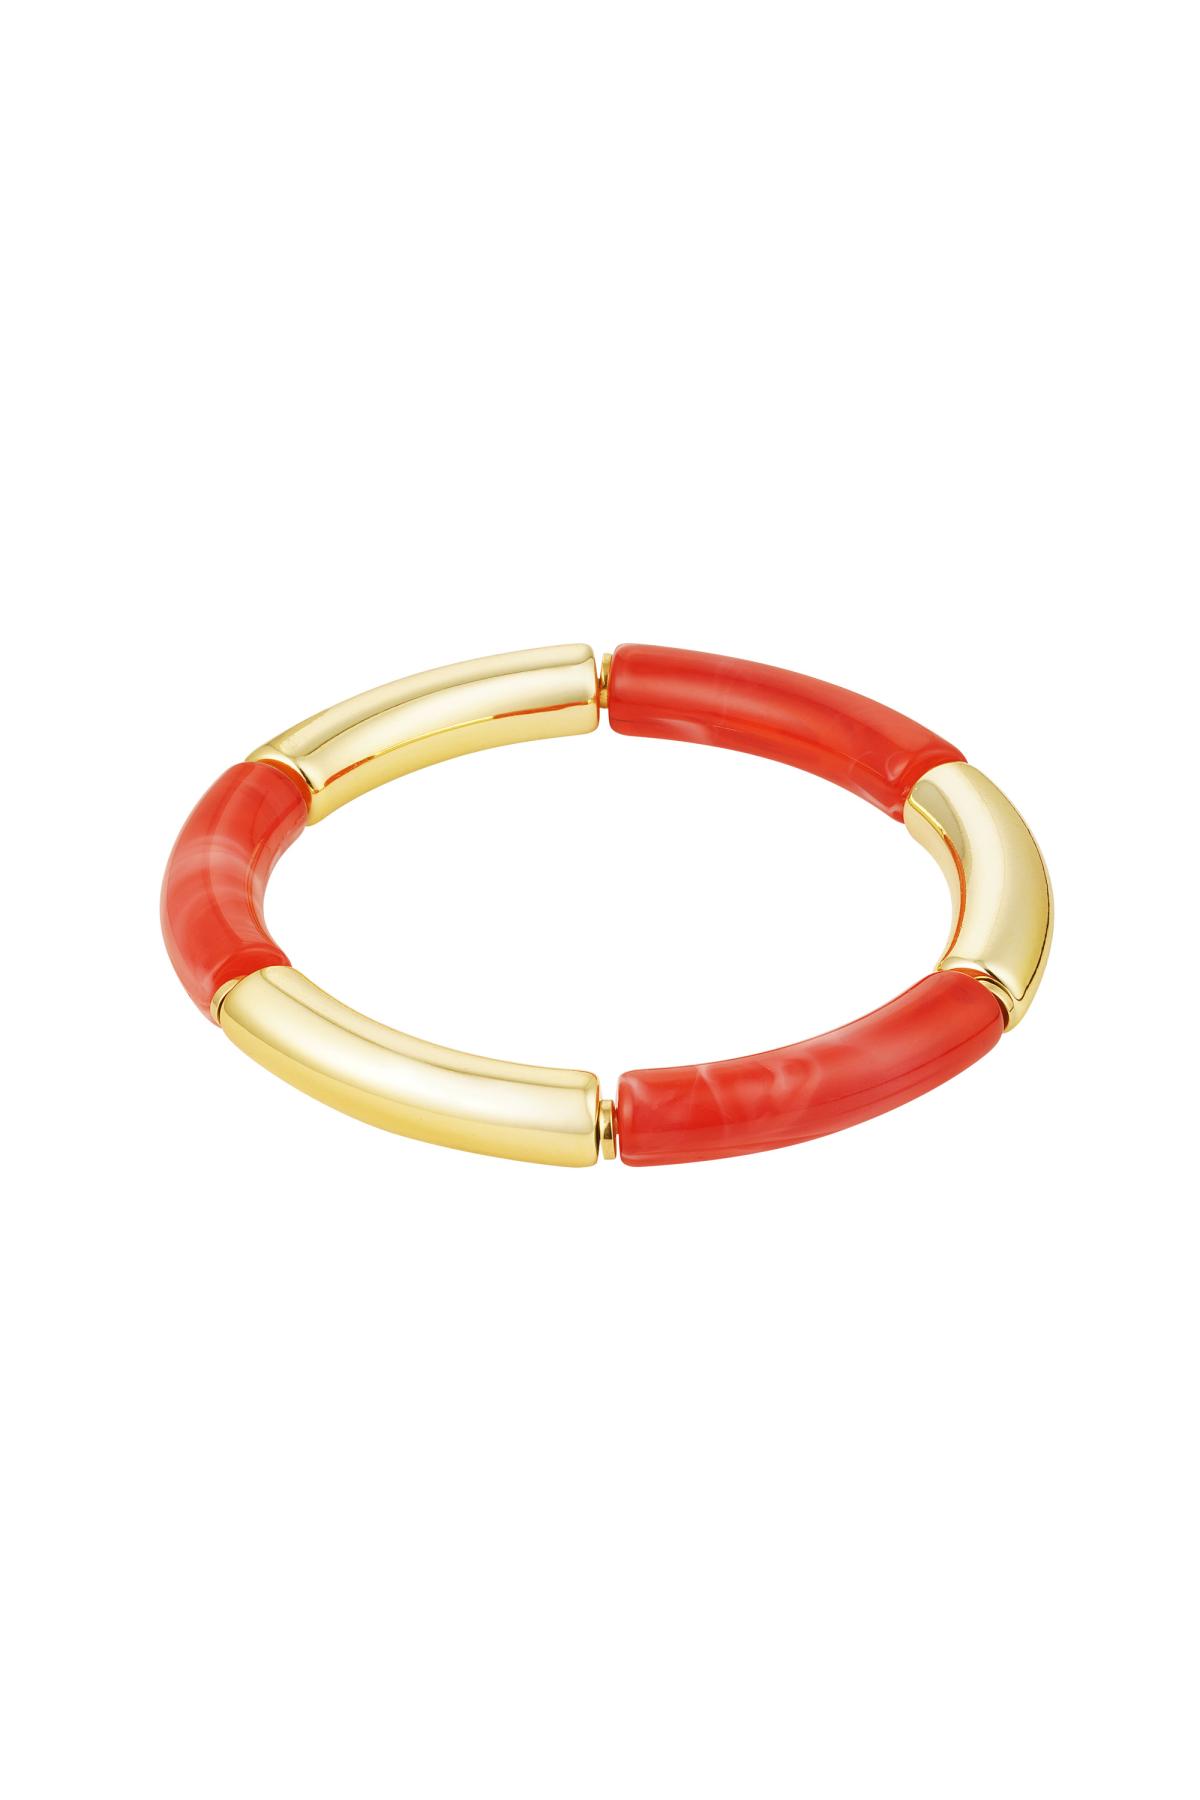 Schlaucharmband gold/farbig Rot Acryl